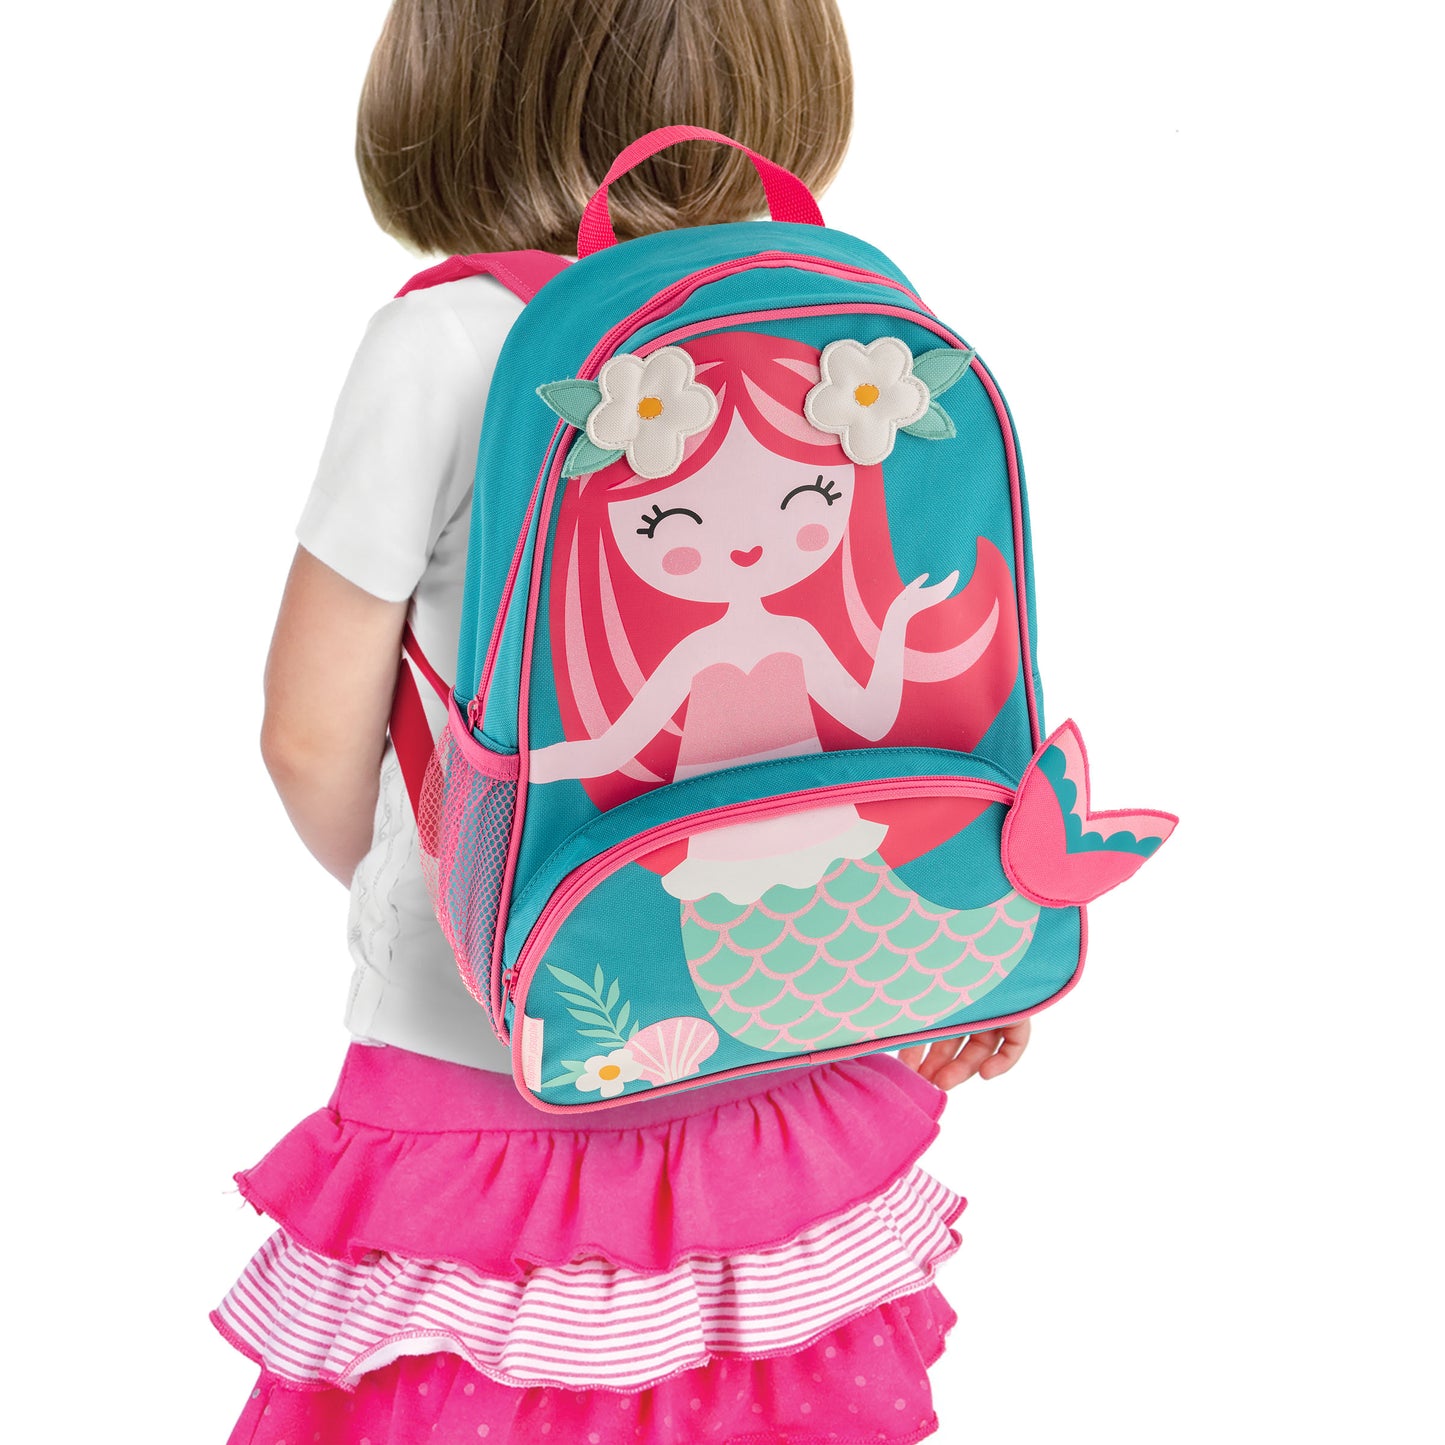 Mermaid Sidekick Backpack with Personalization